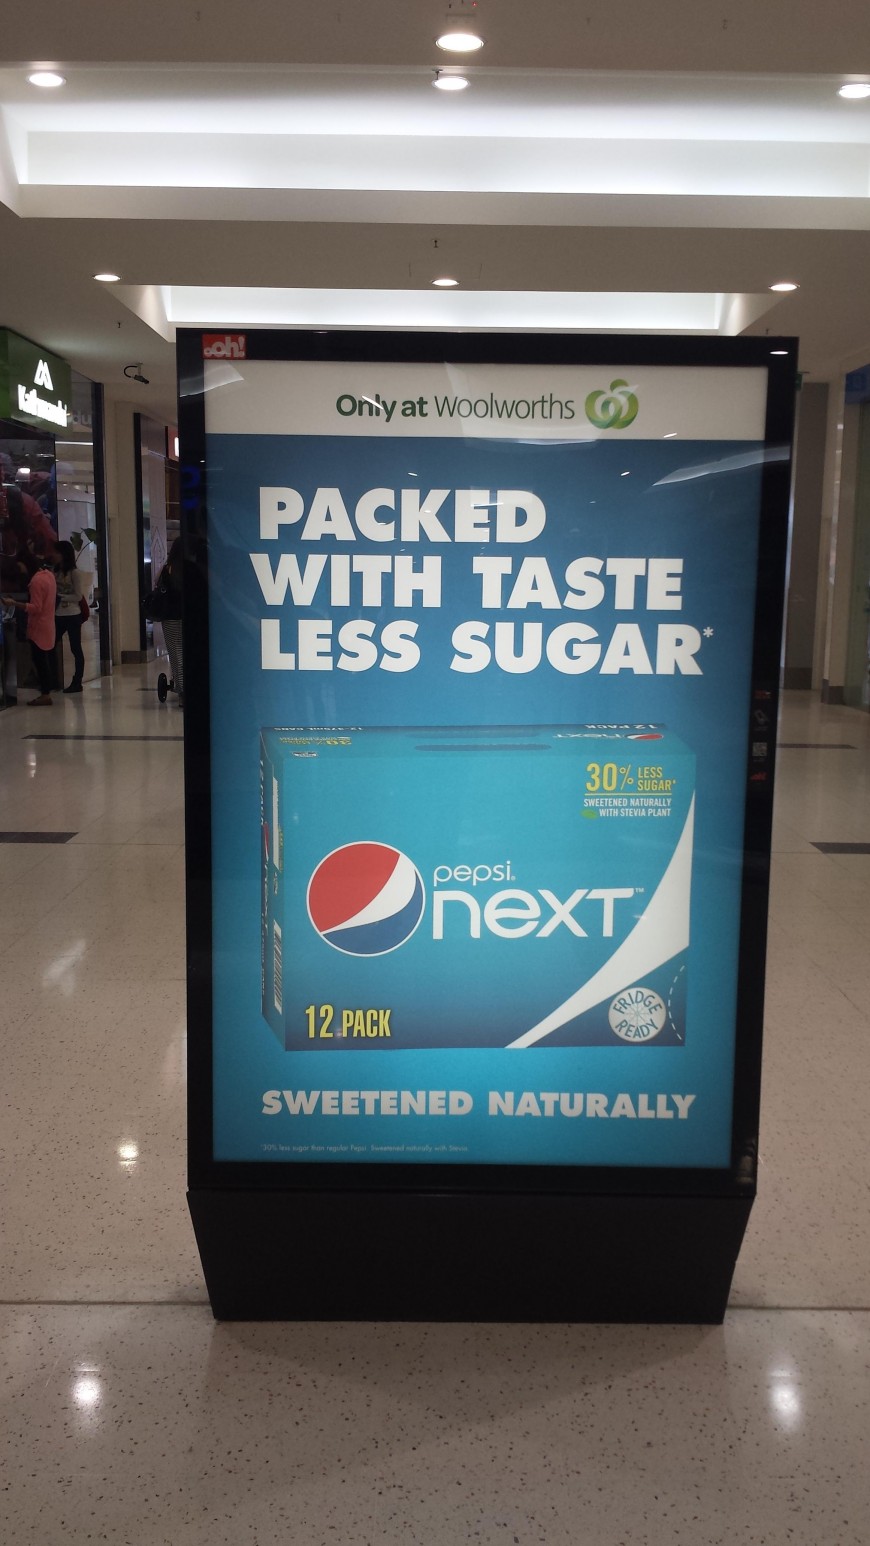 With Taste-less Sugar?